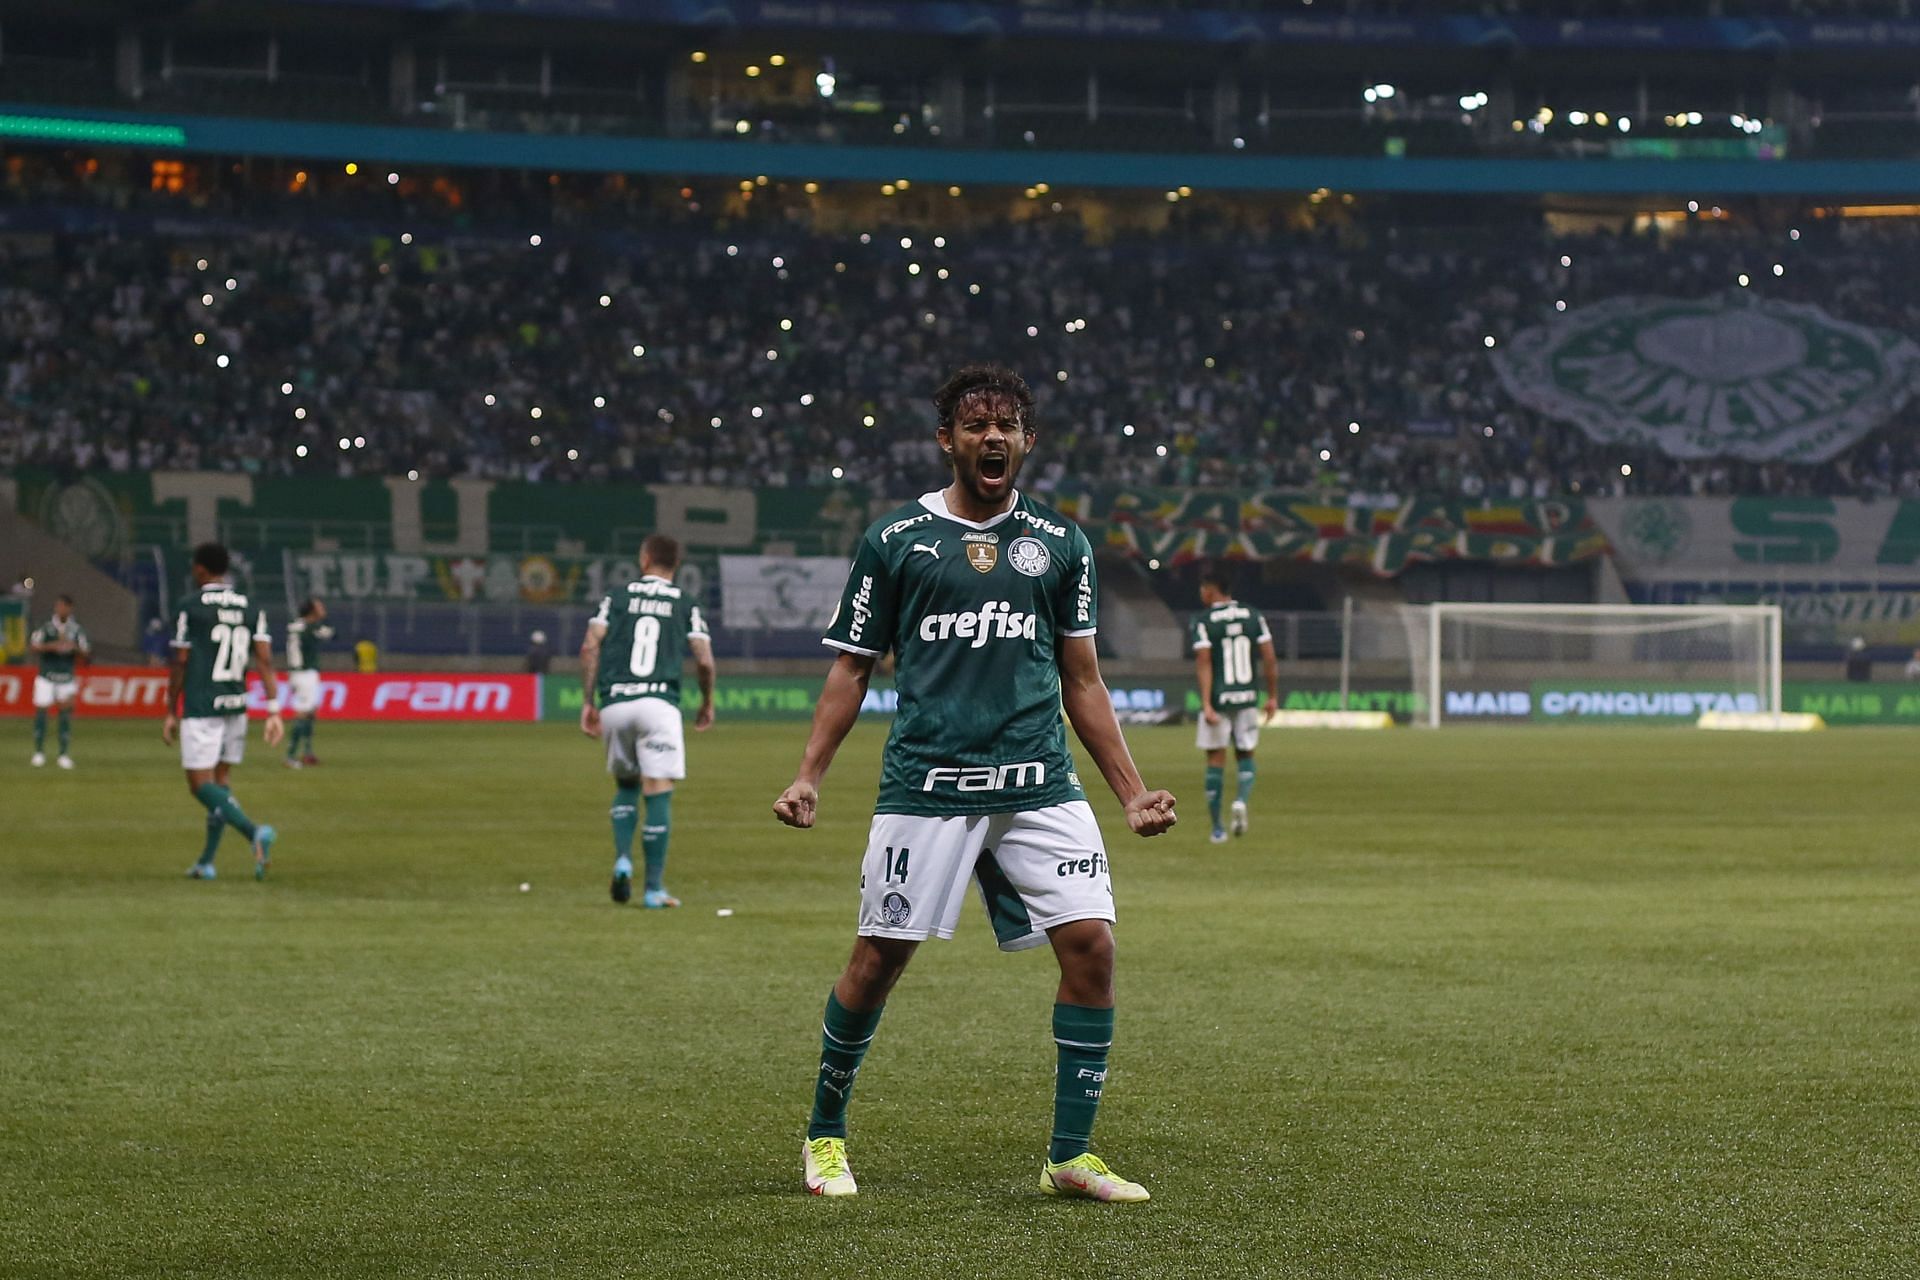 Palmeiras play Athletico Paranaense on Sunday